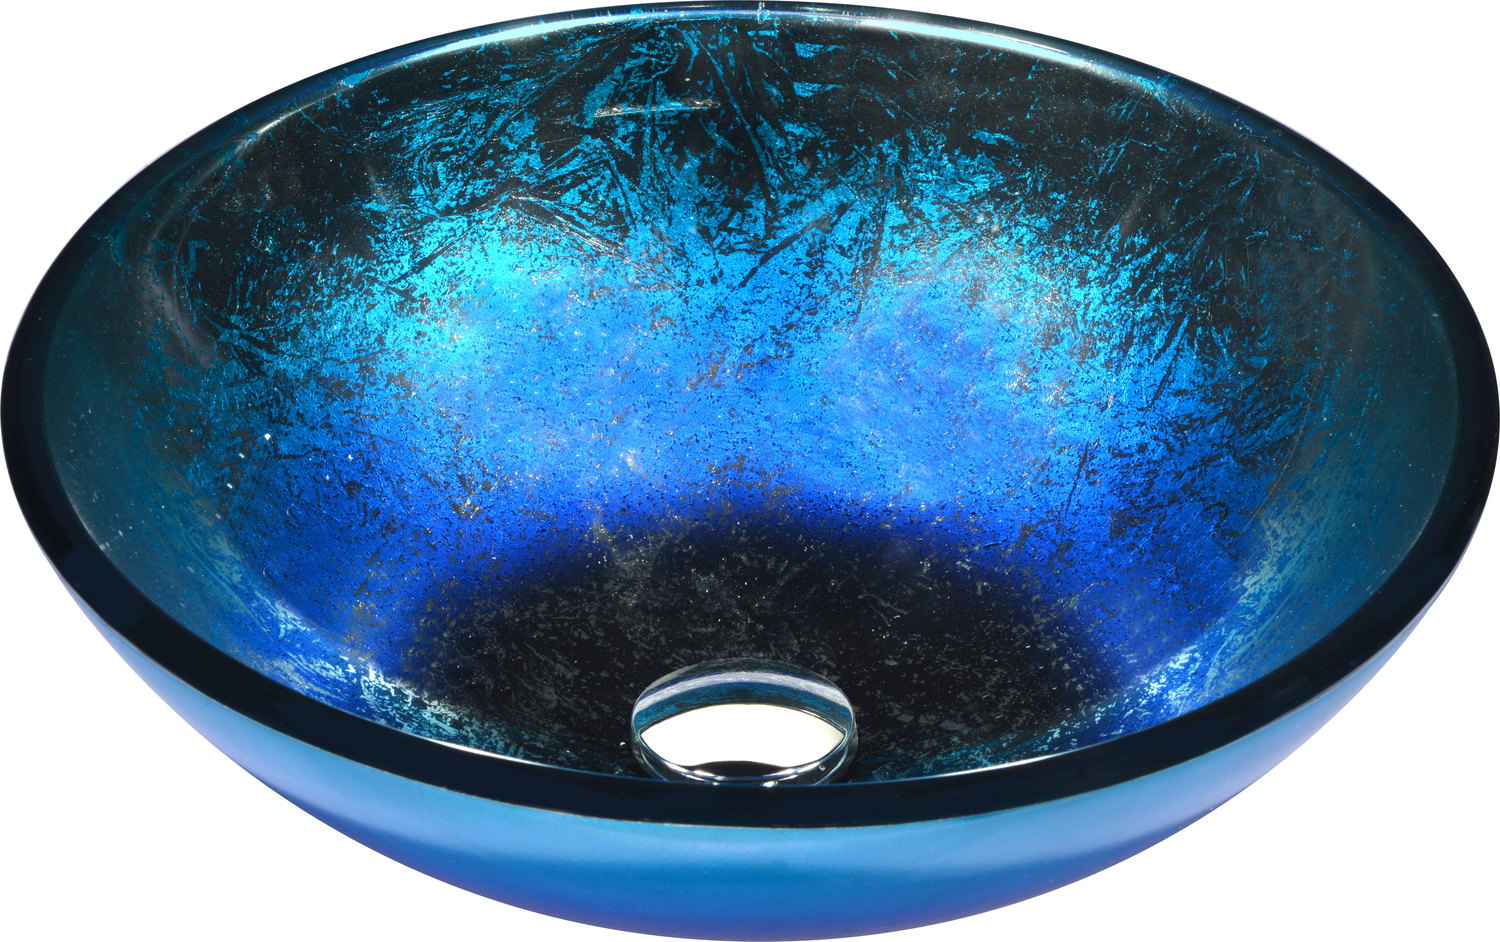 vessel sinks for bathroom vanities Anzzi BATHROOM - Sinks - Vessel - Tempered Glass Blue